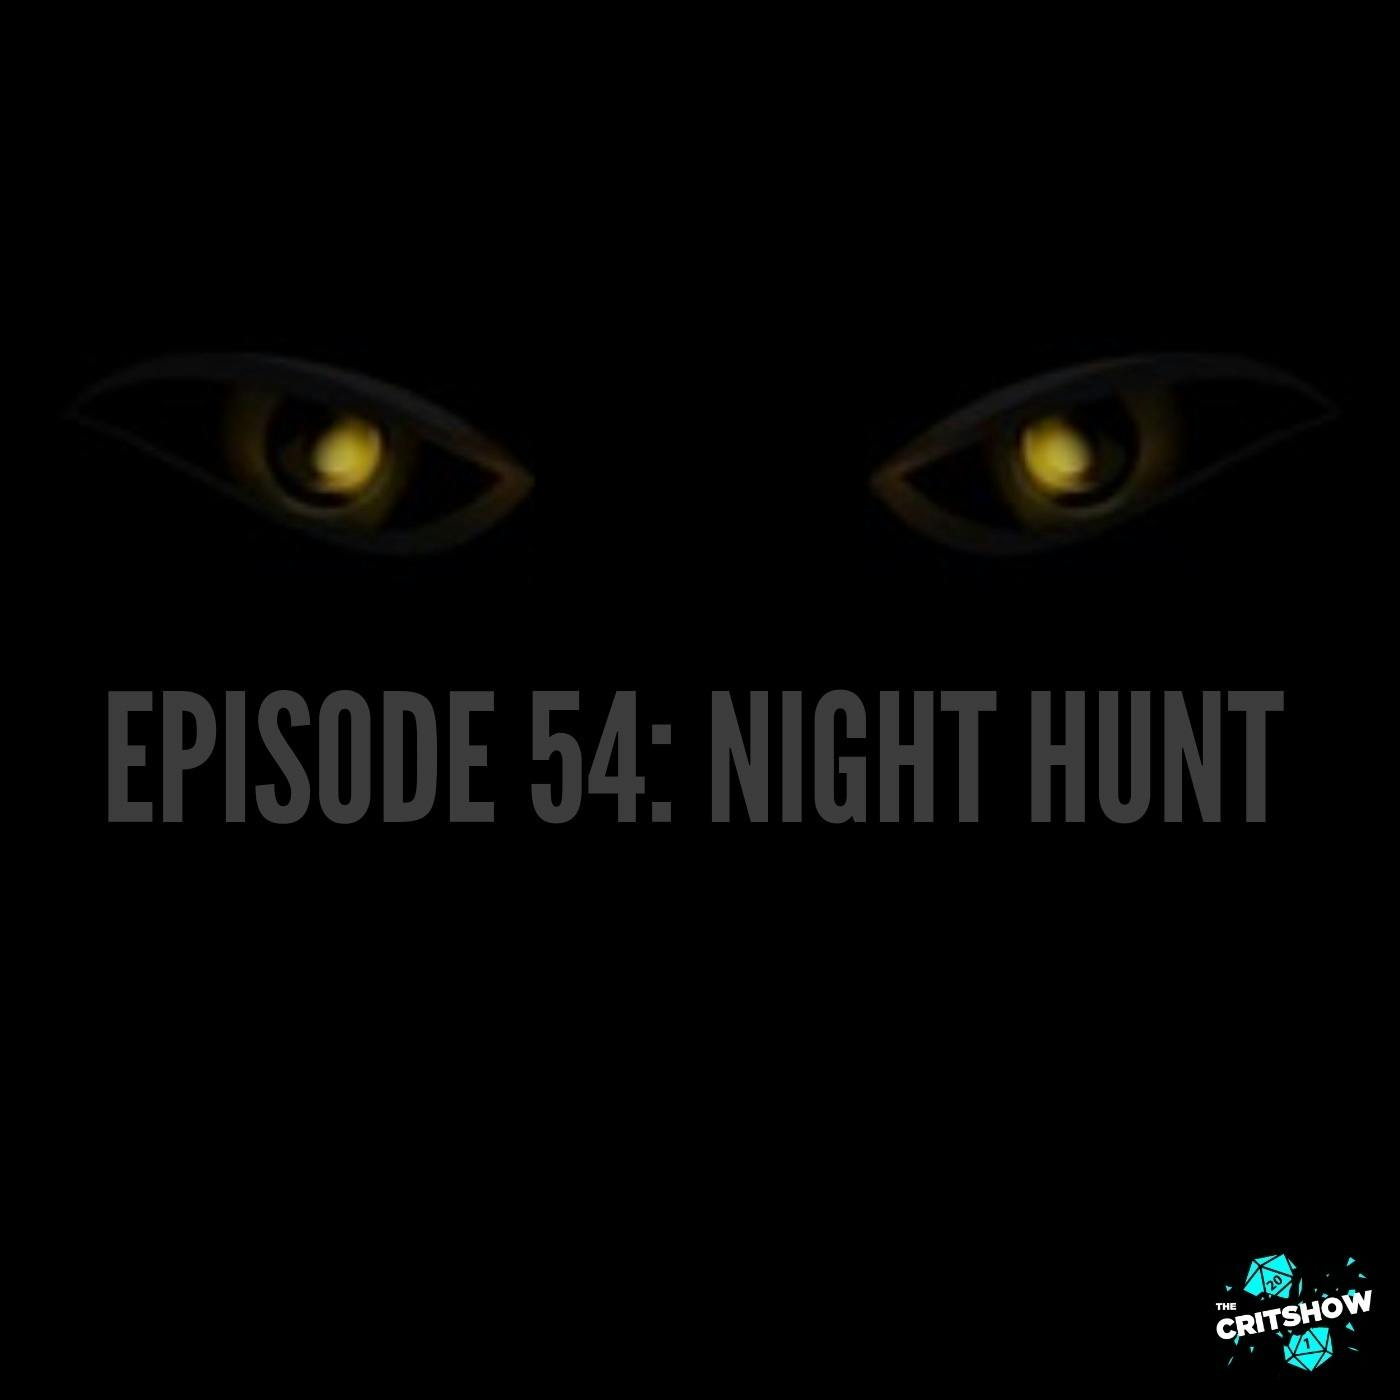 Night Hunt (S1, E54)